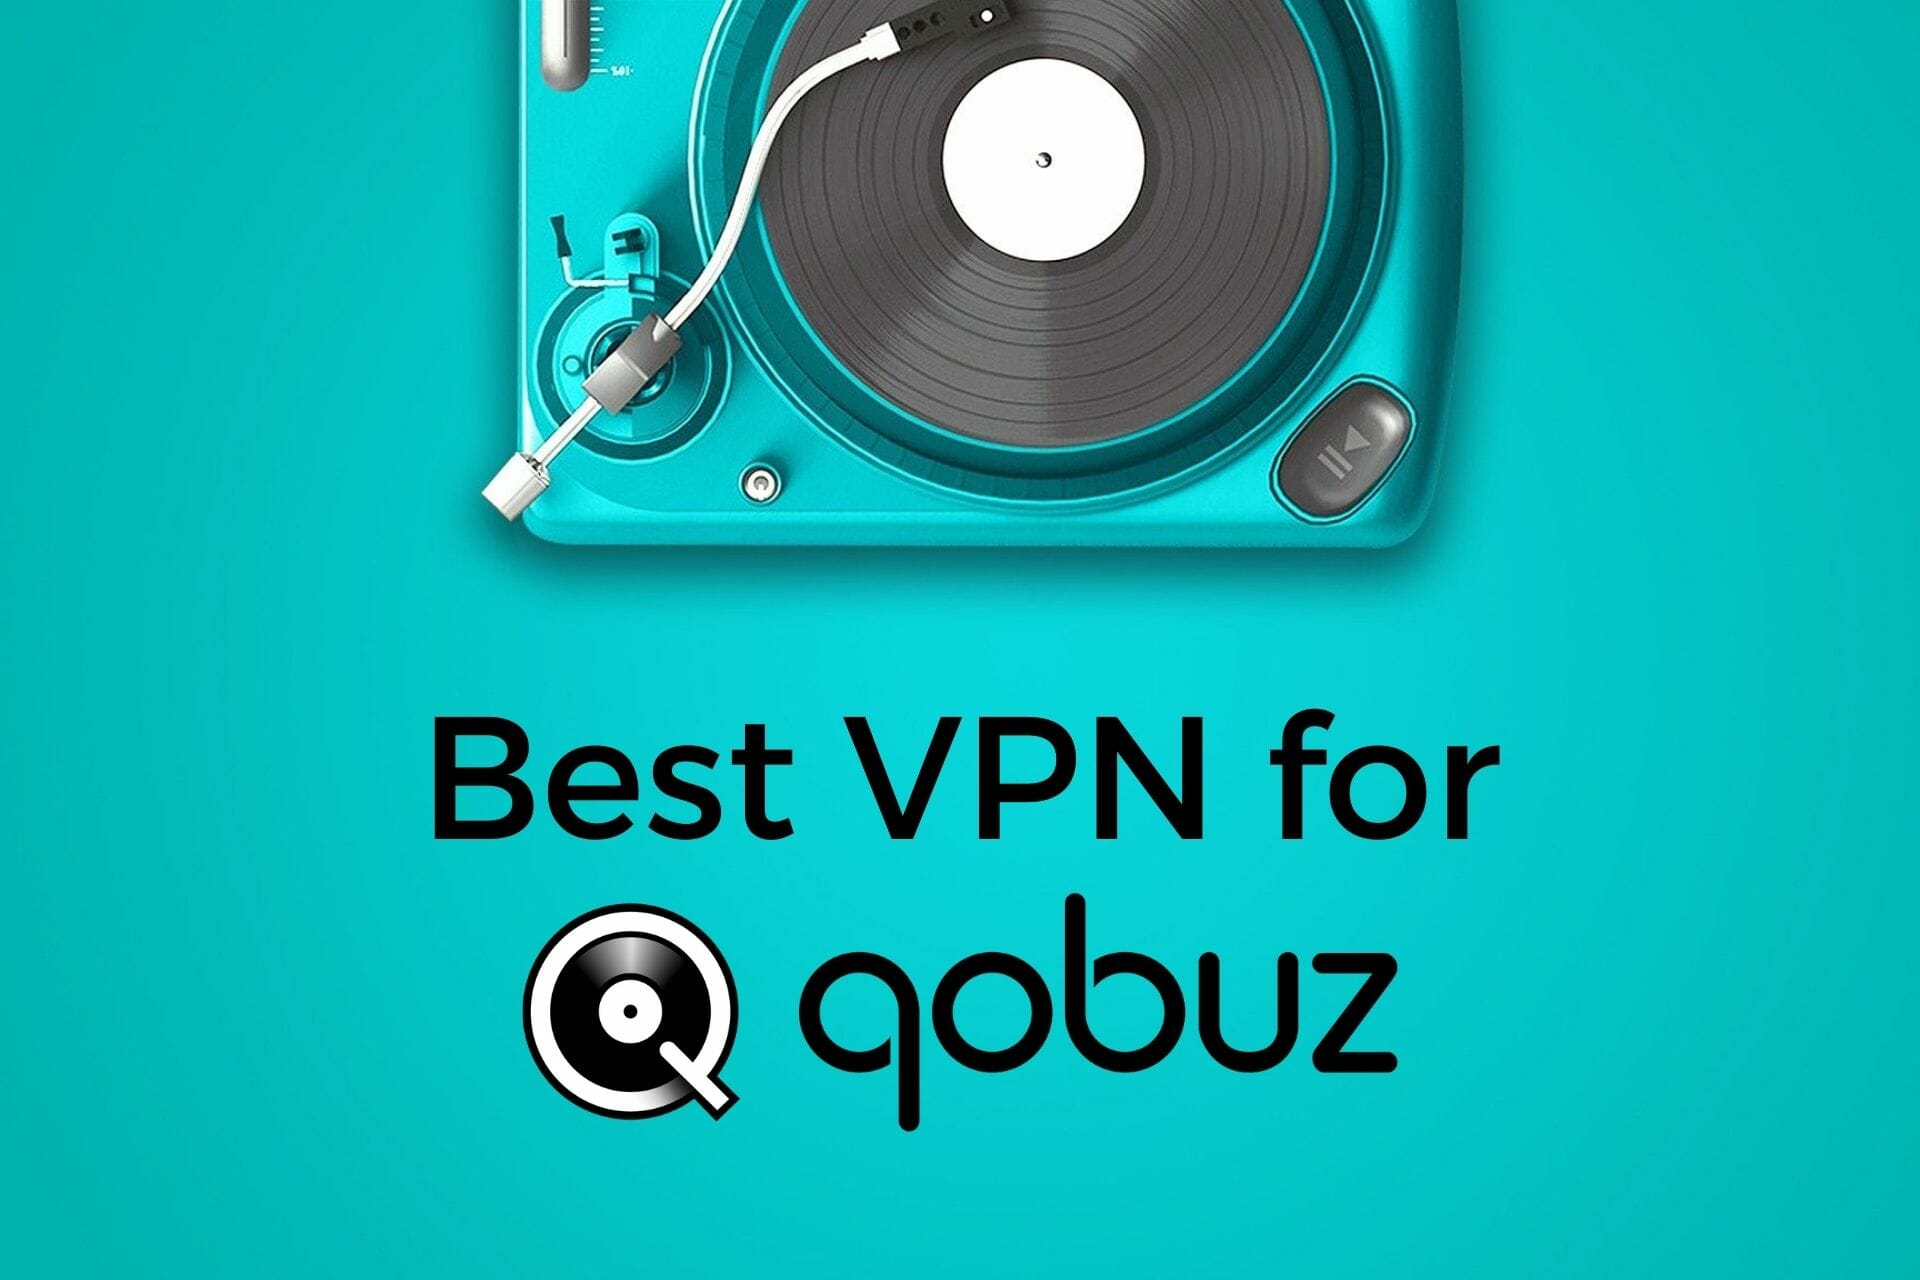 Best VPN for Qobuz